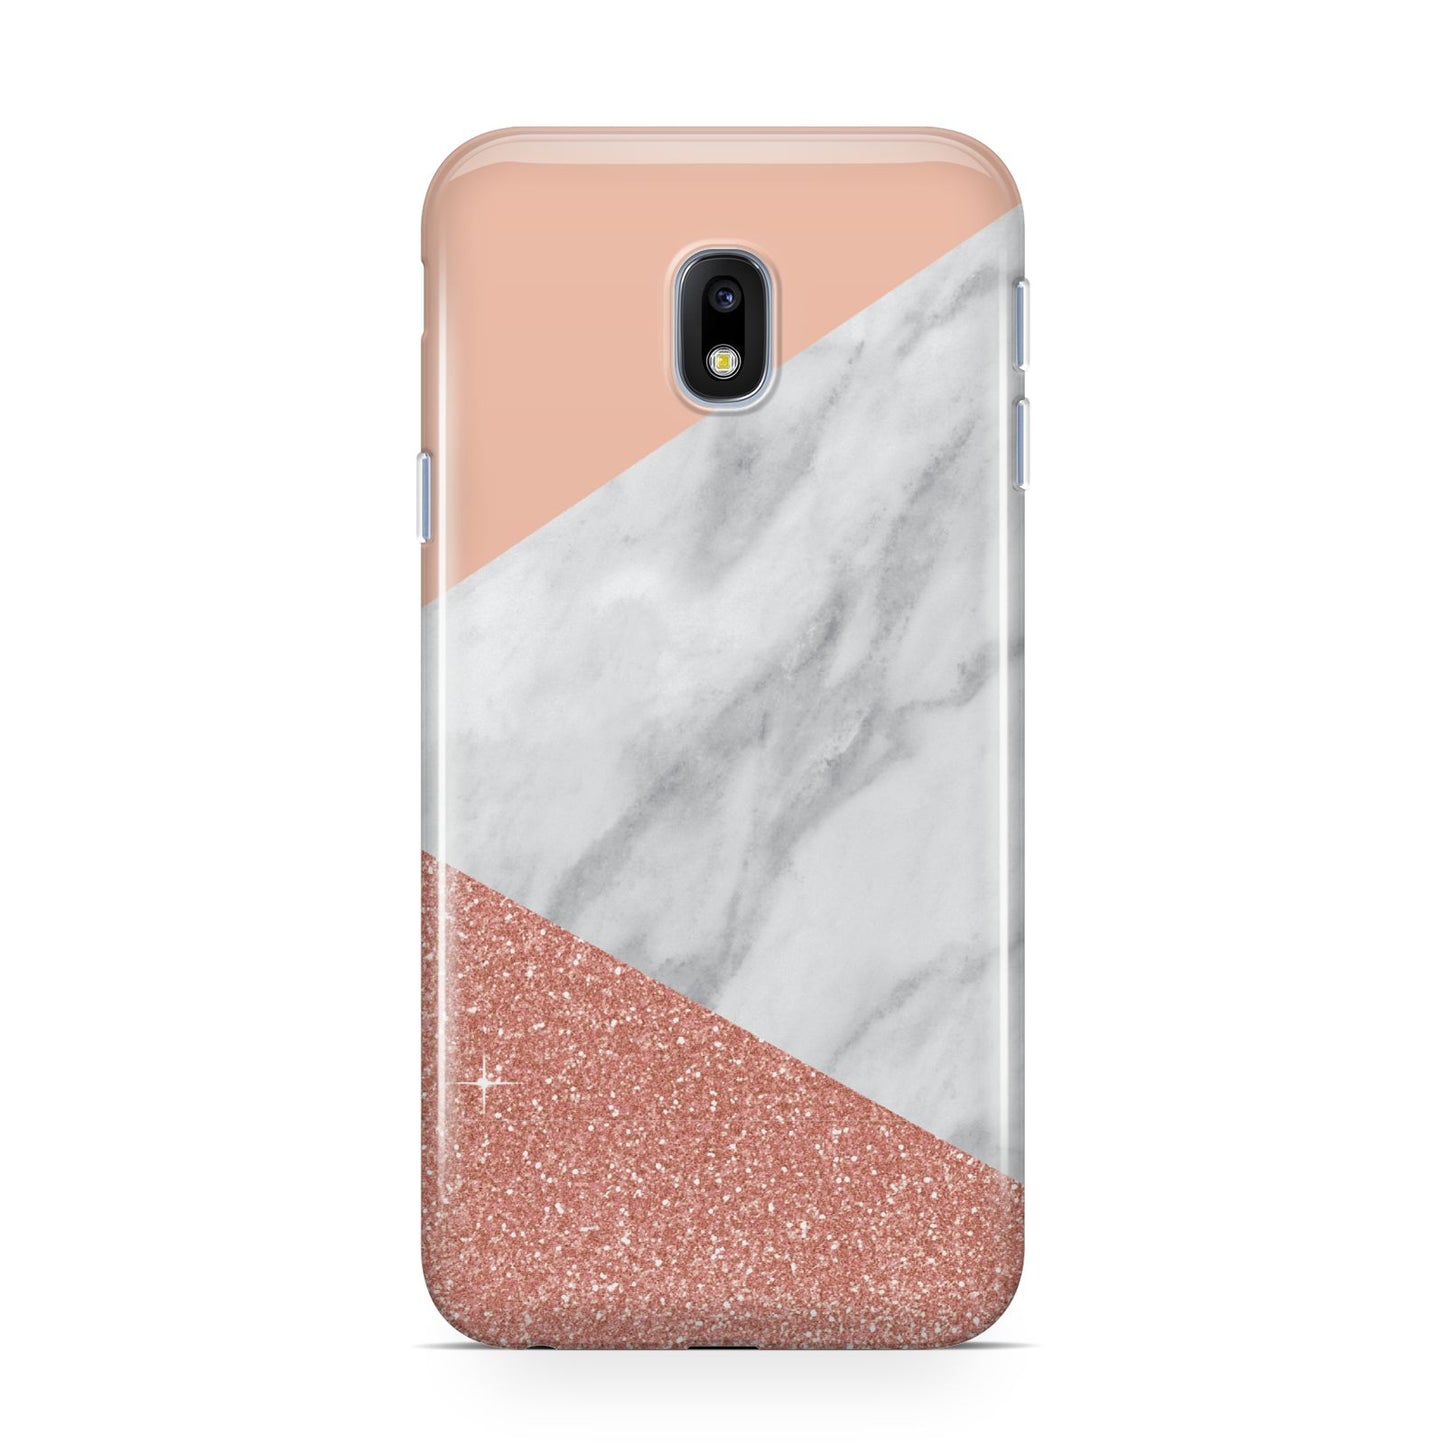 Marble White Rose Gold Samsung Galaxy J3 2017 Case